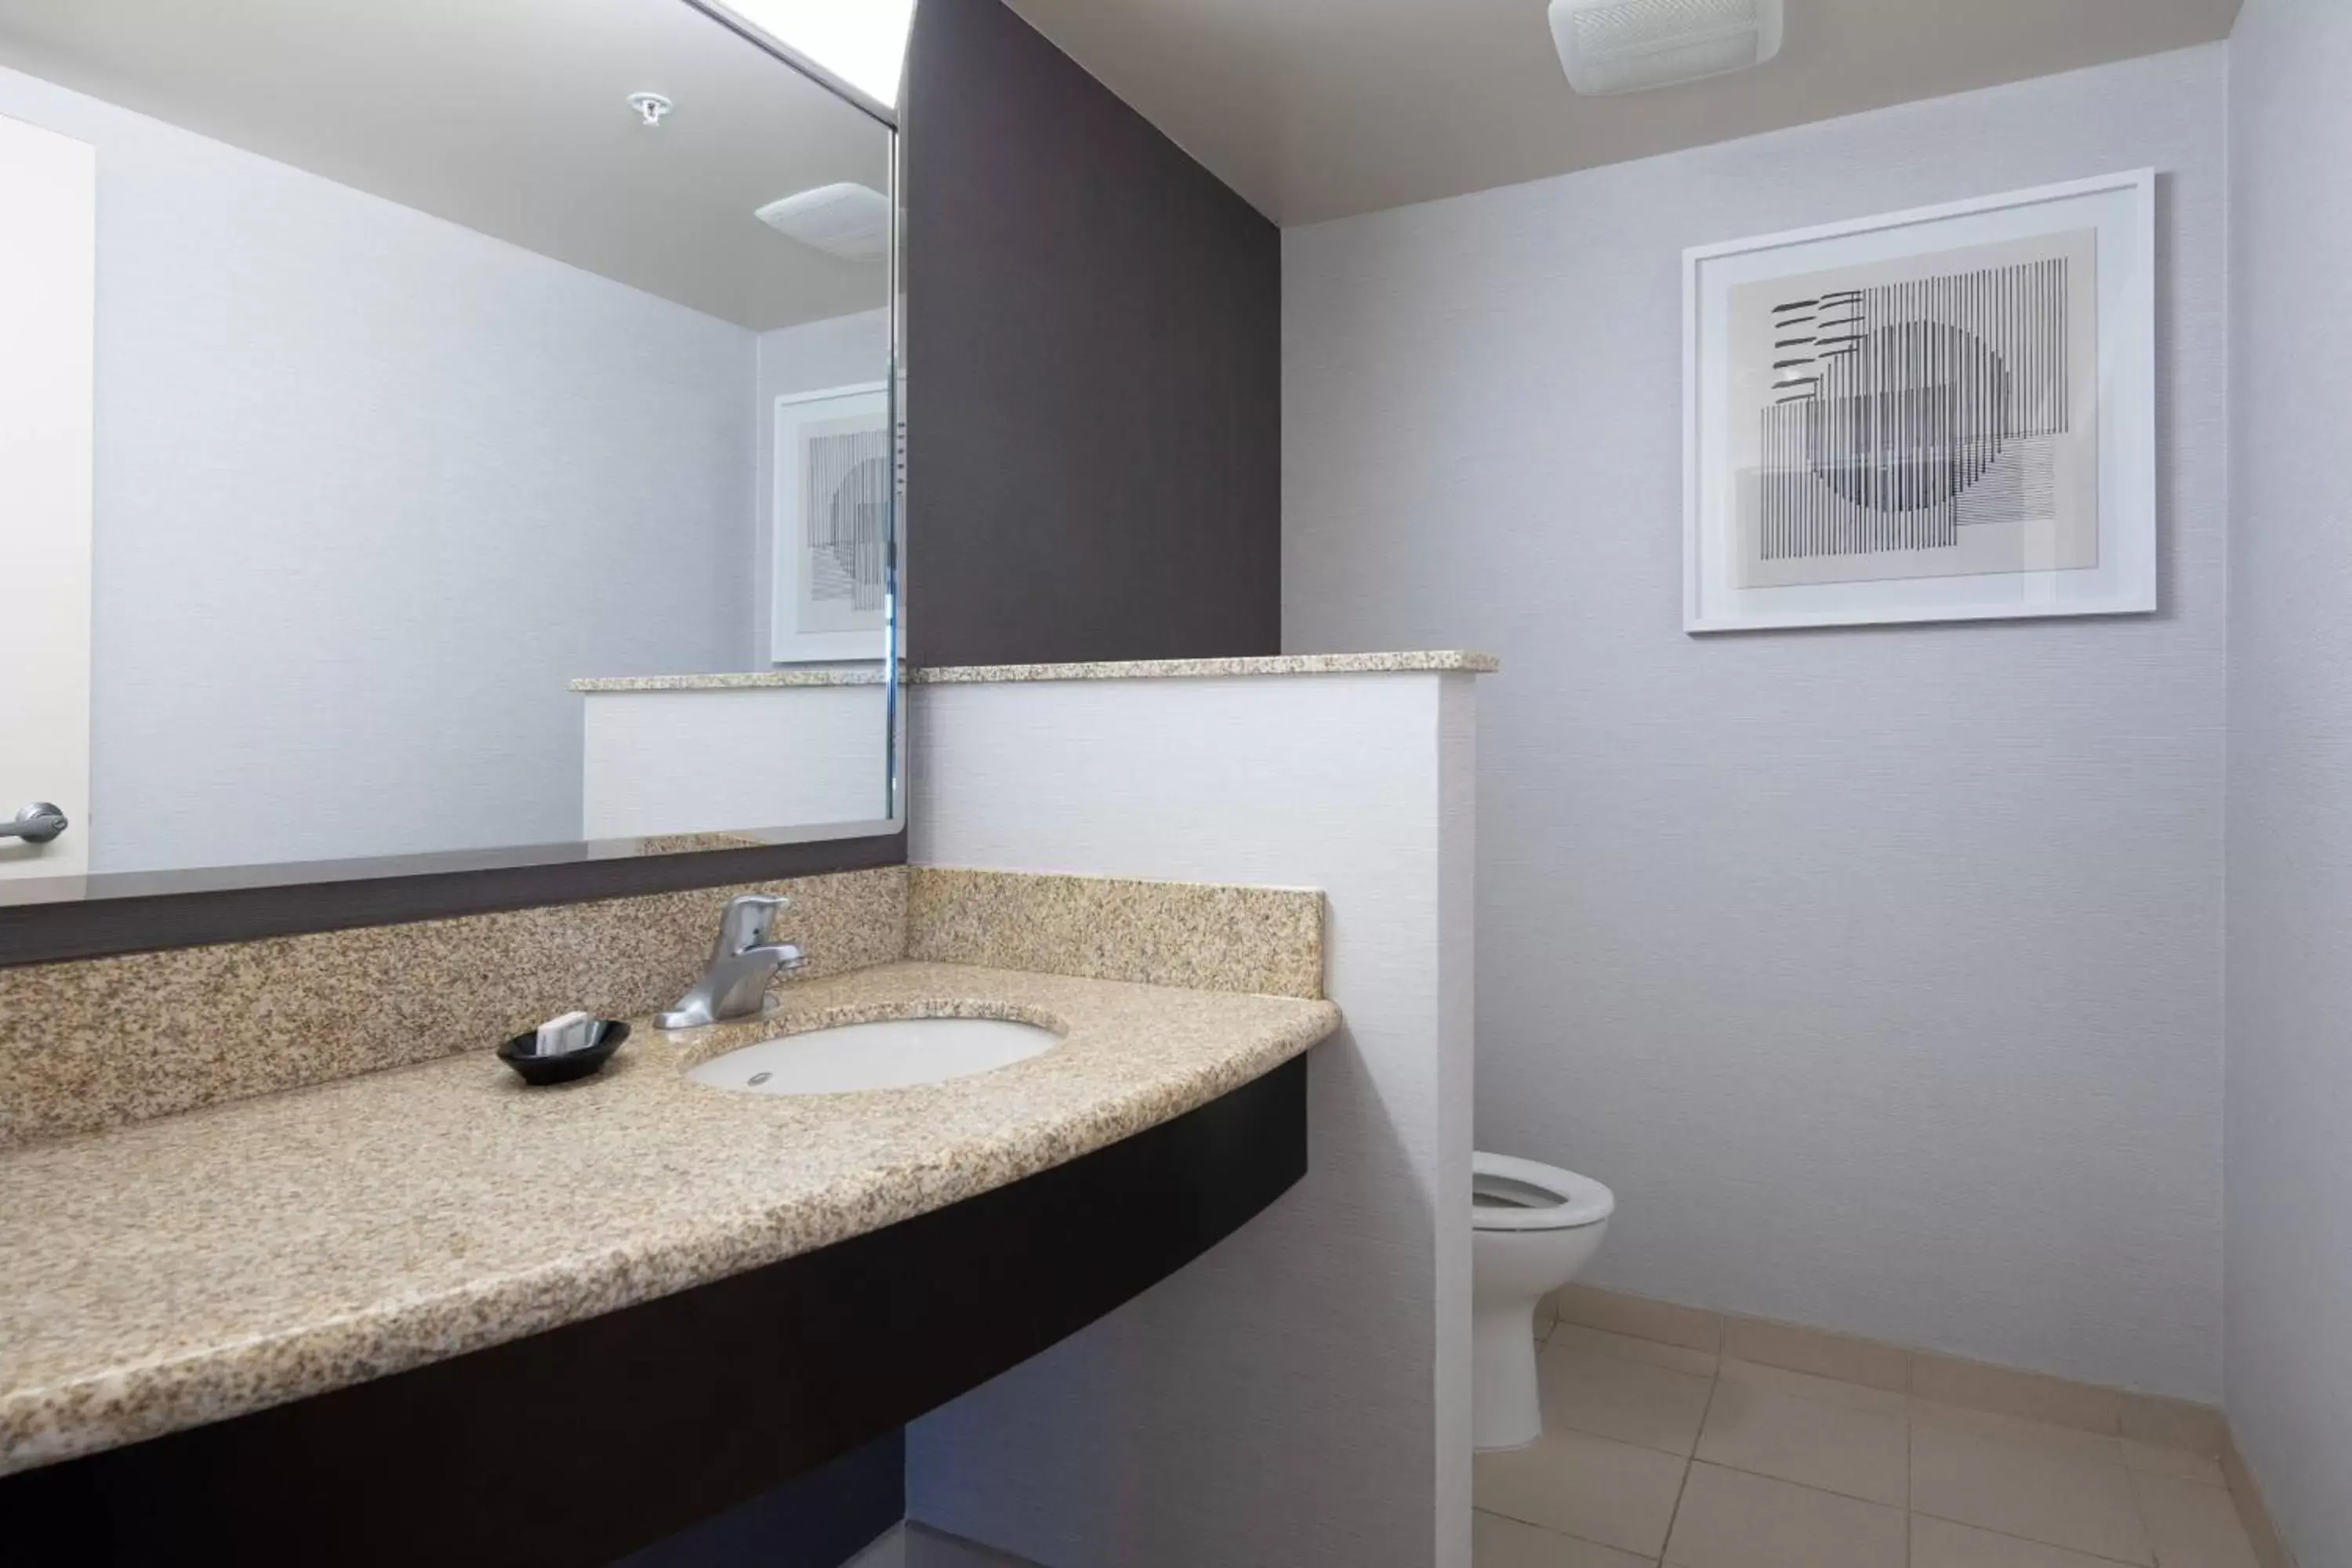 Photo of the whole room, Bathroom in Courtyard by Marriott Cincinnati Midtown/Rookwood